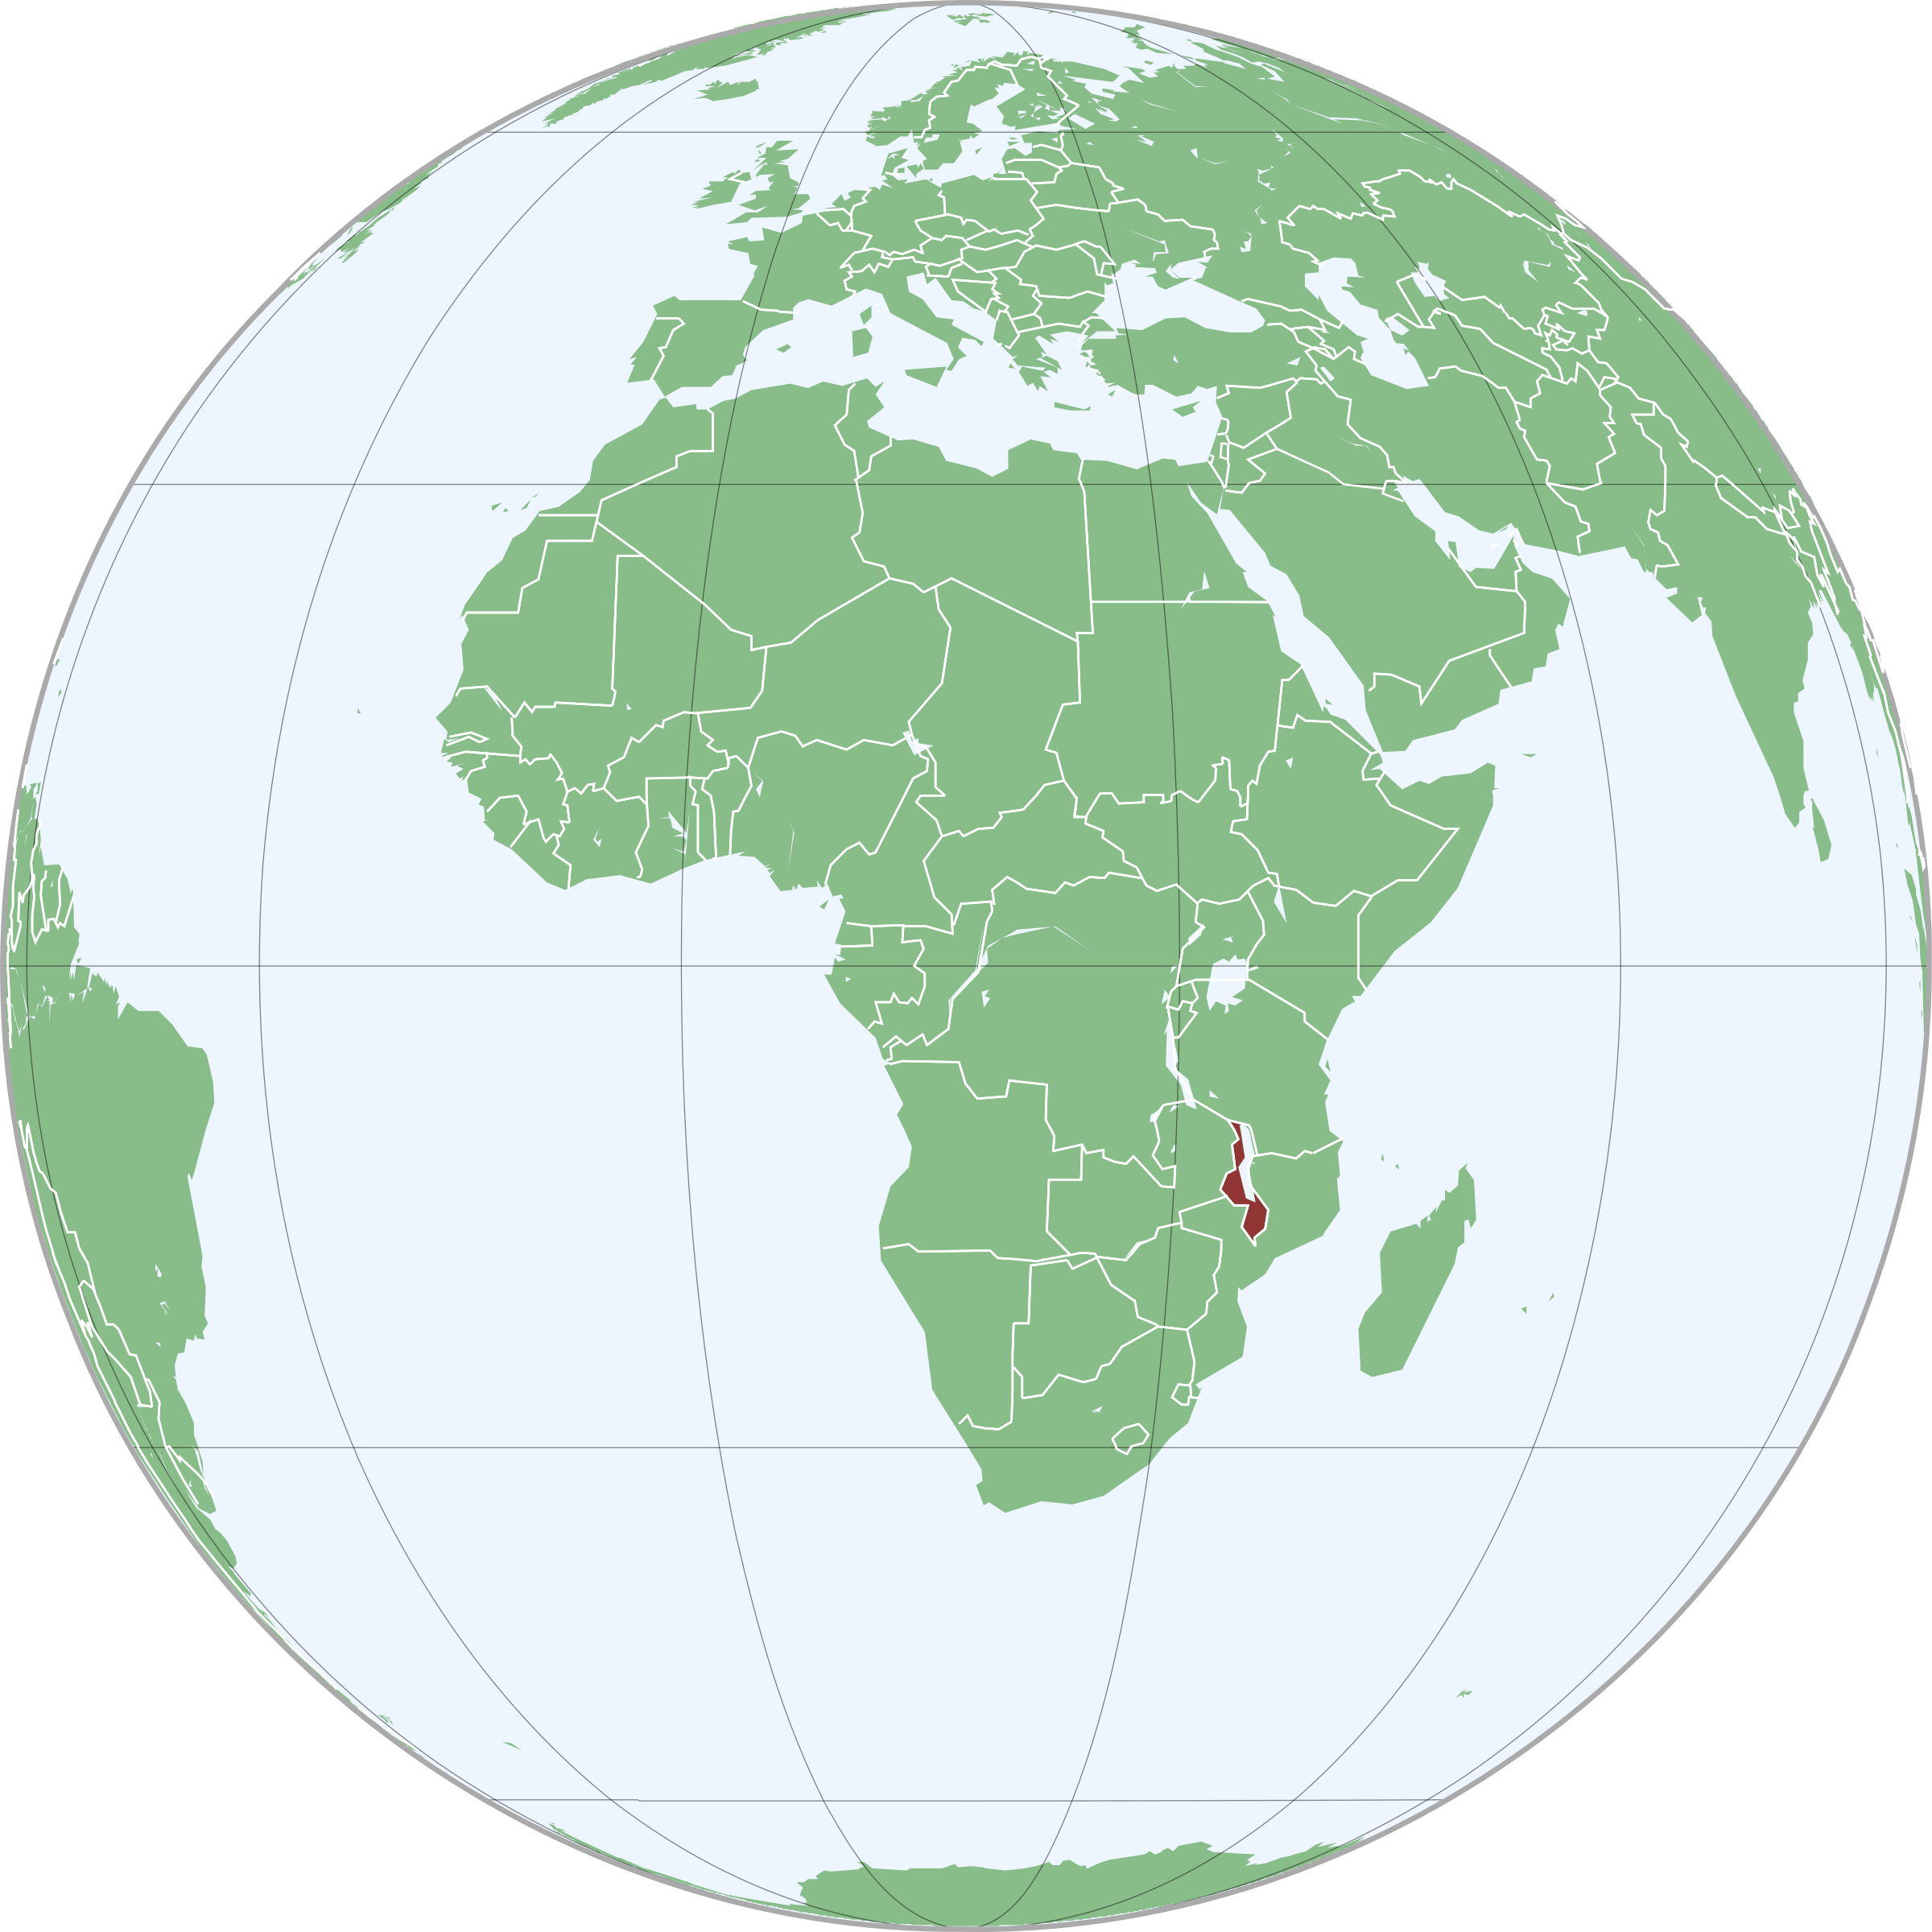 Malawi Highlightedon World Map